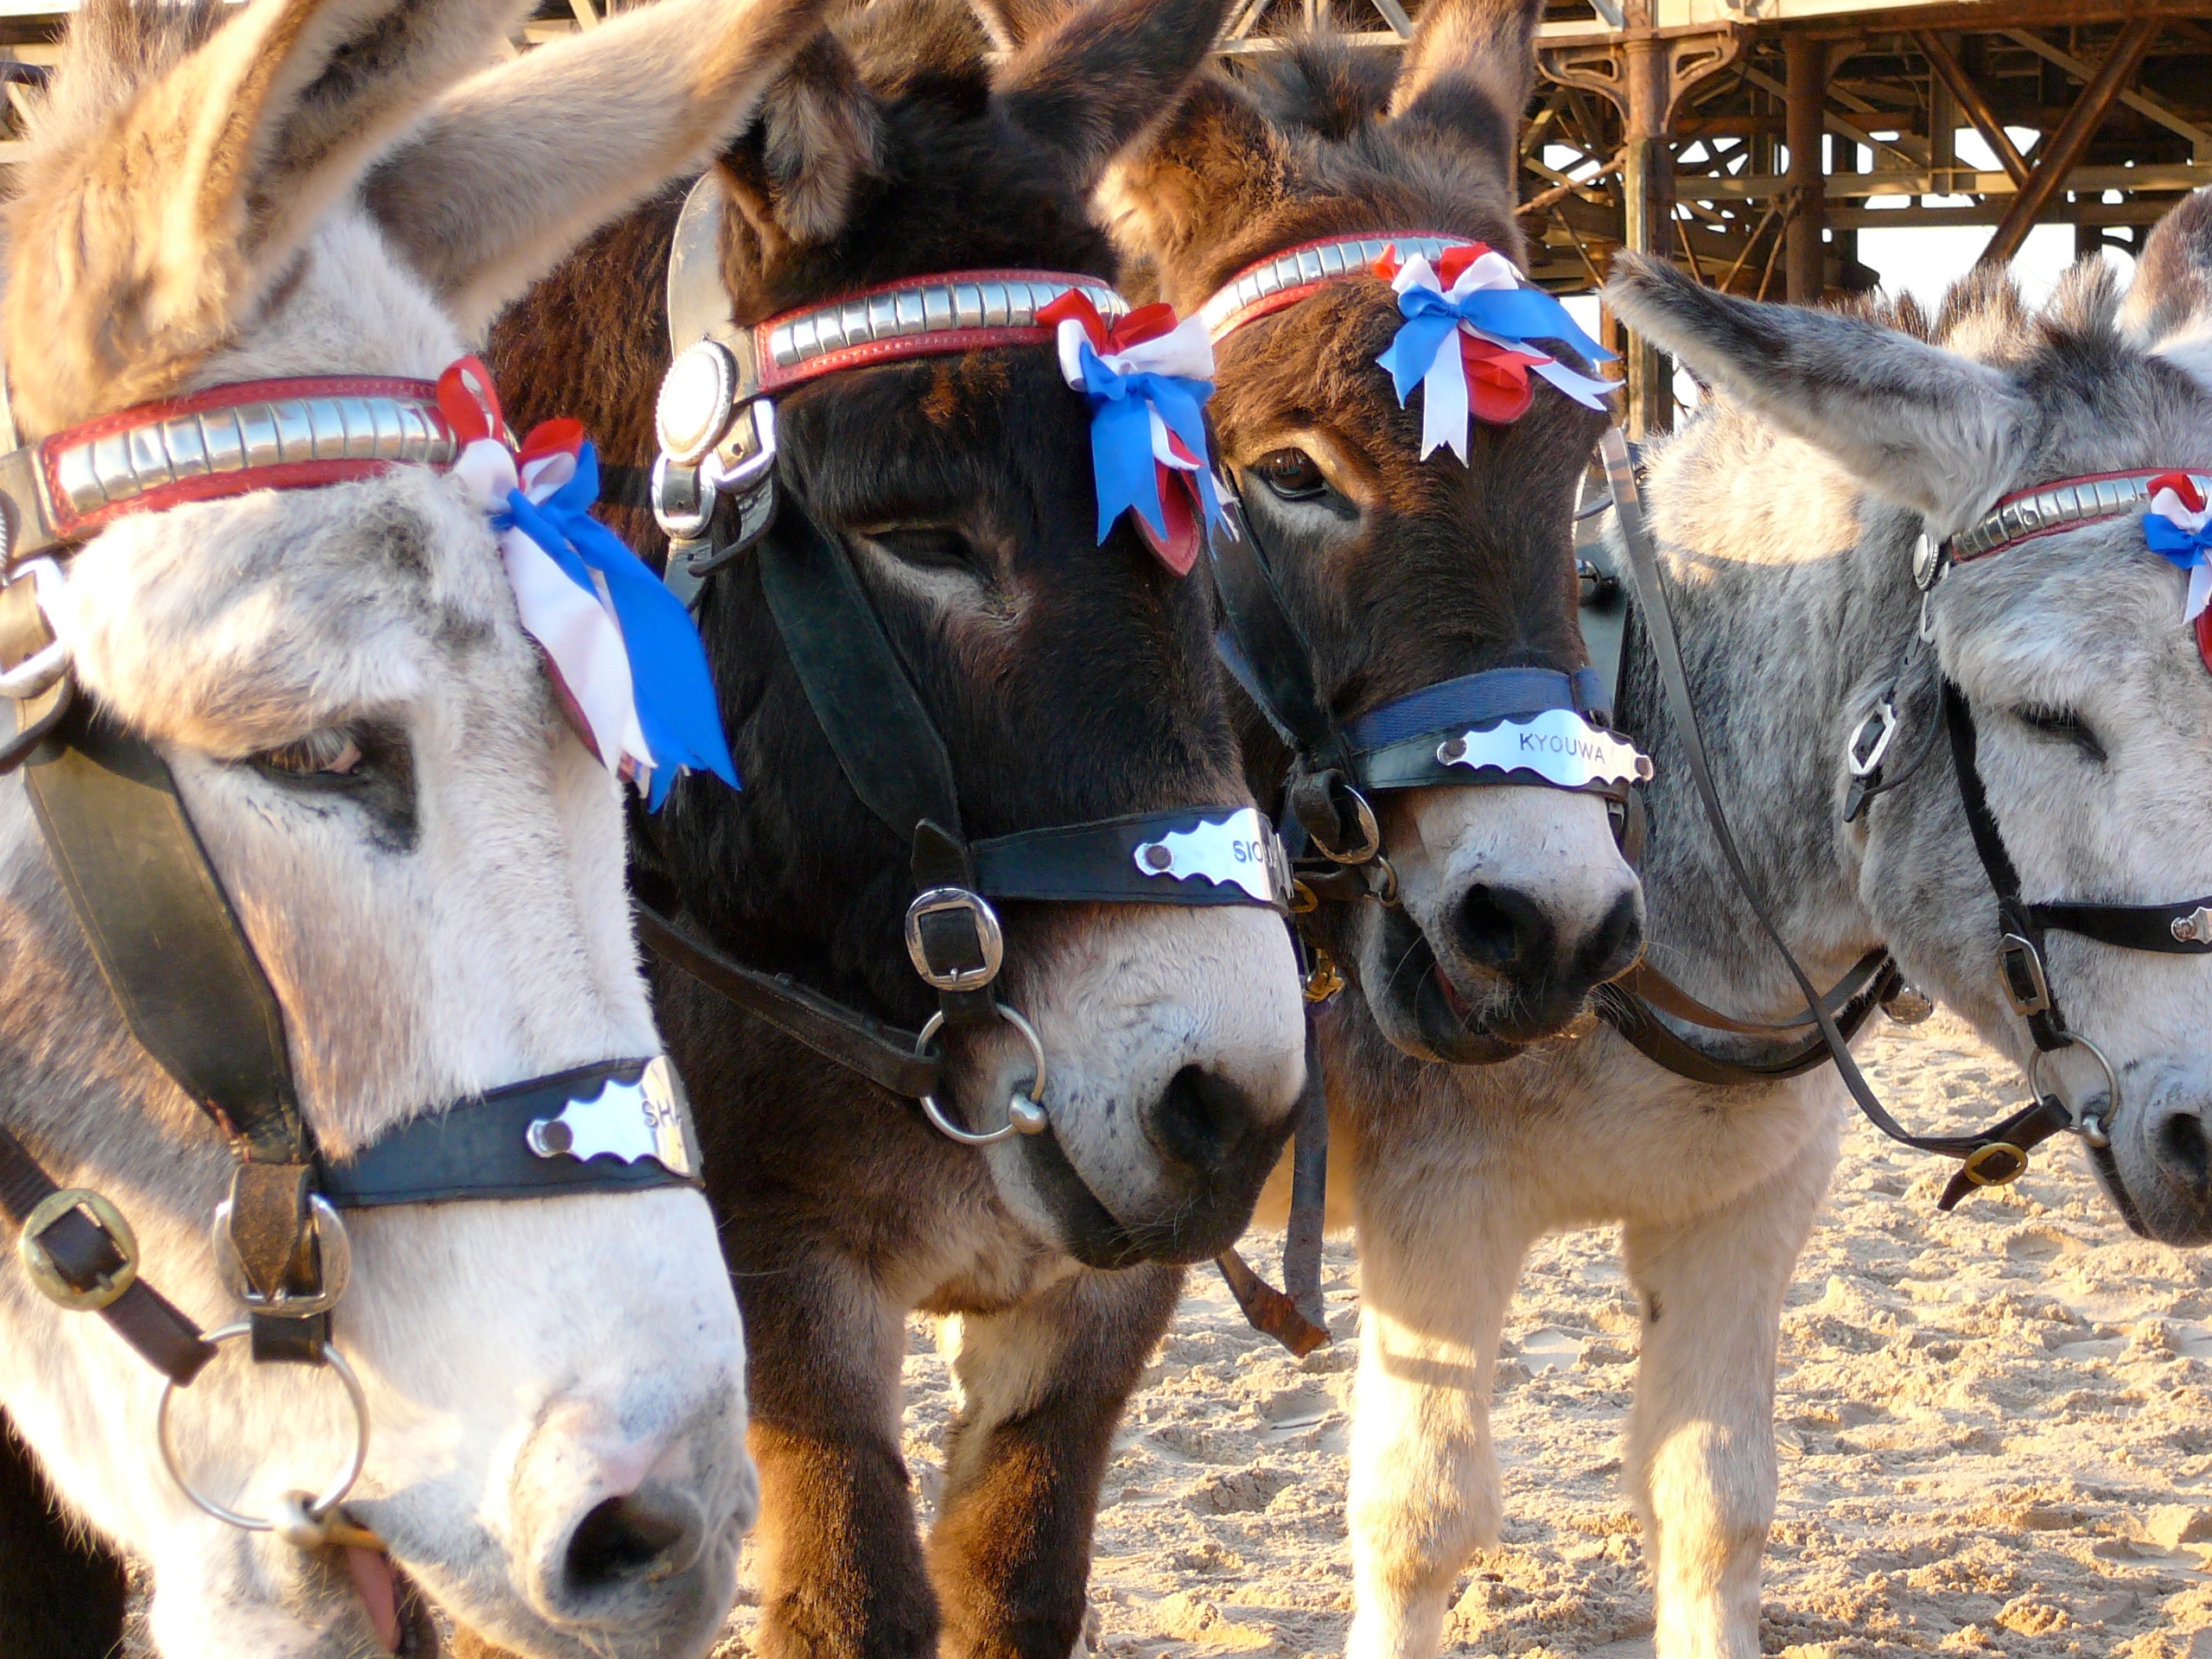 Donkeys in Blackpool, England